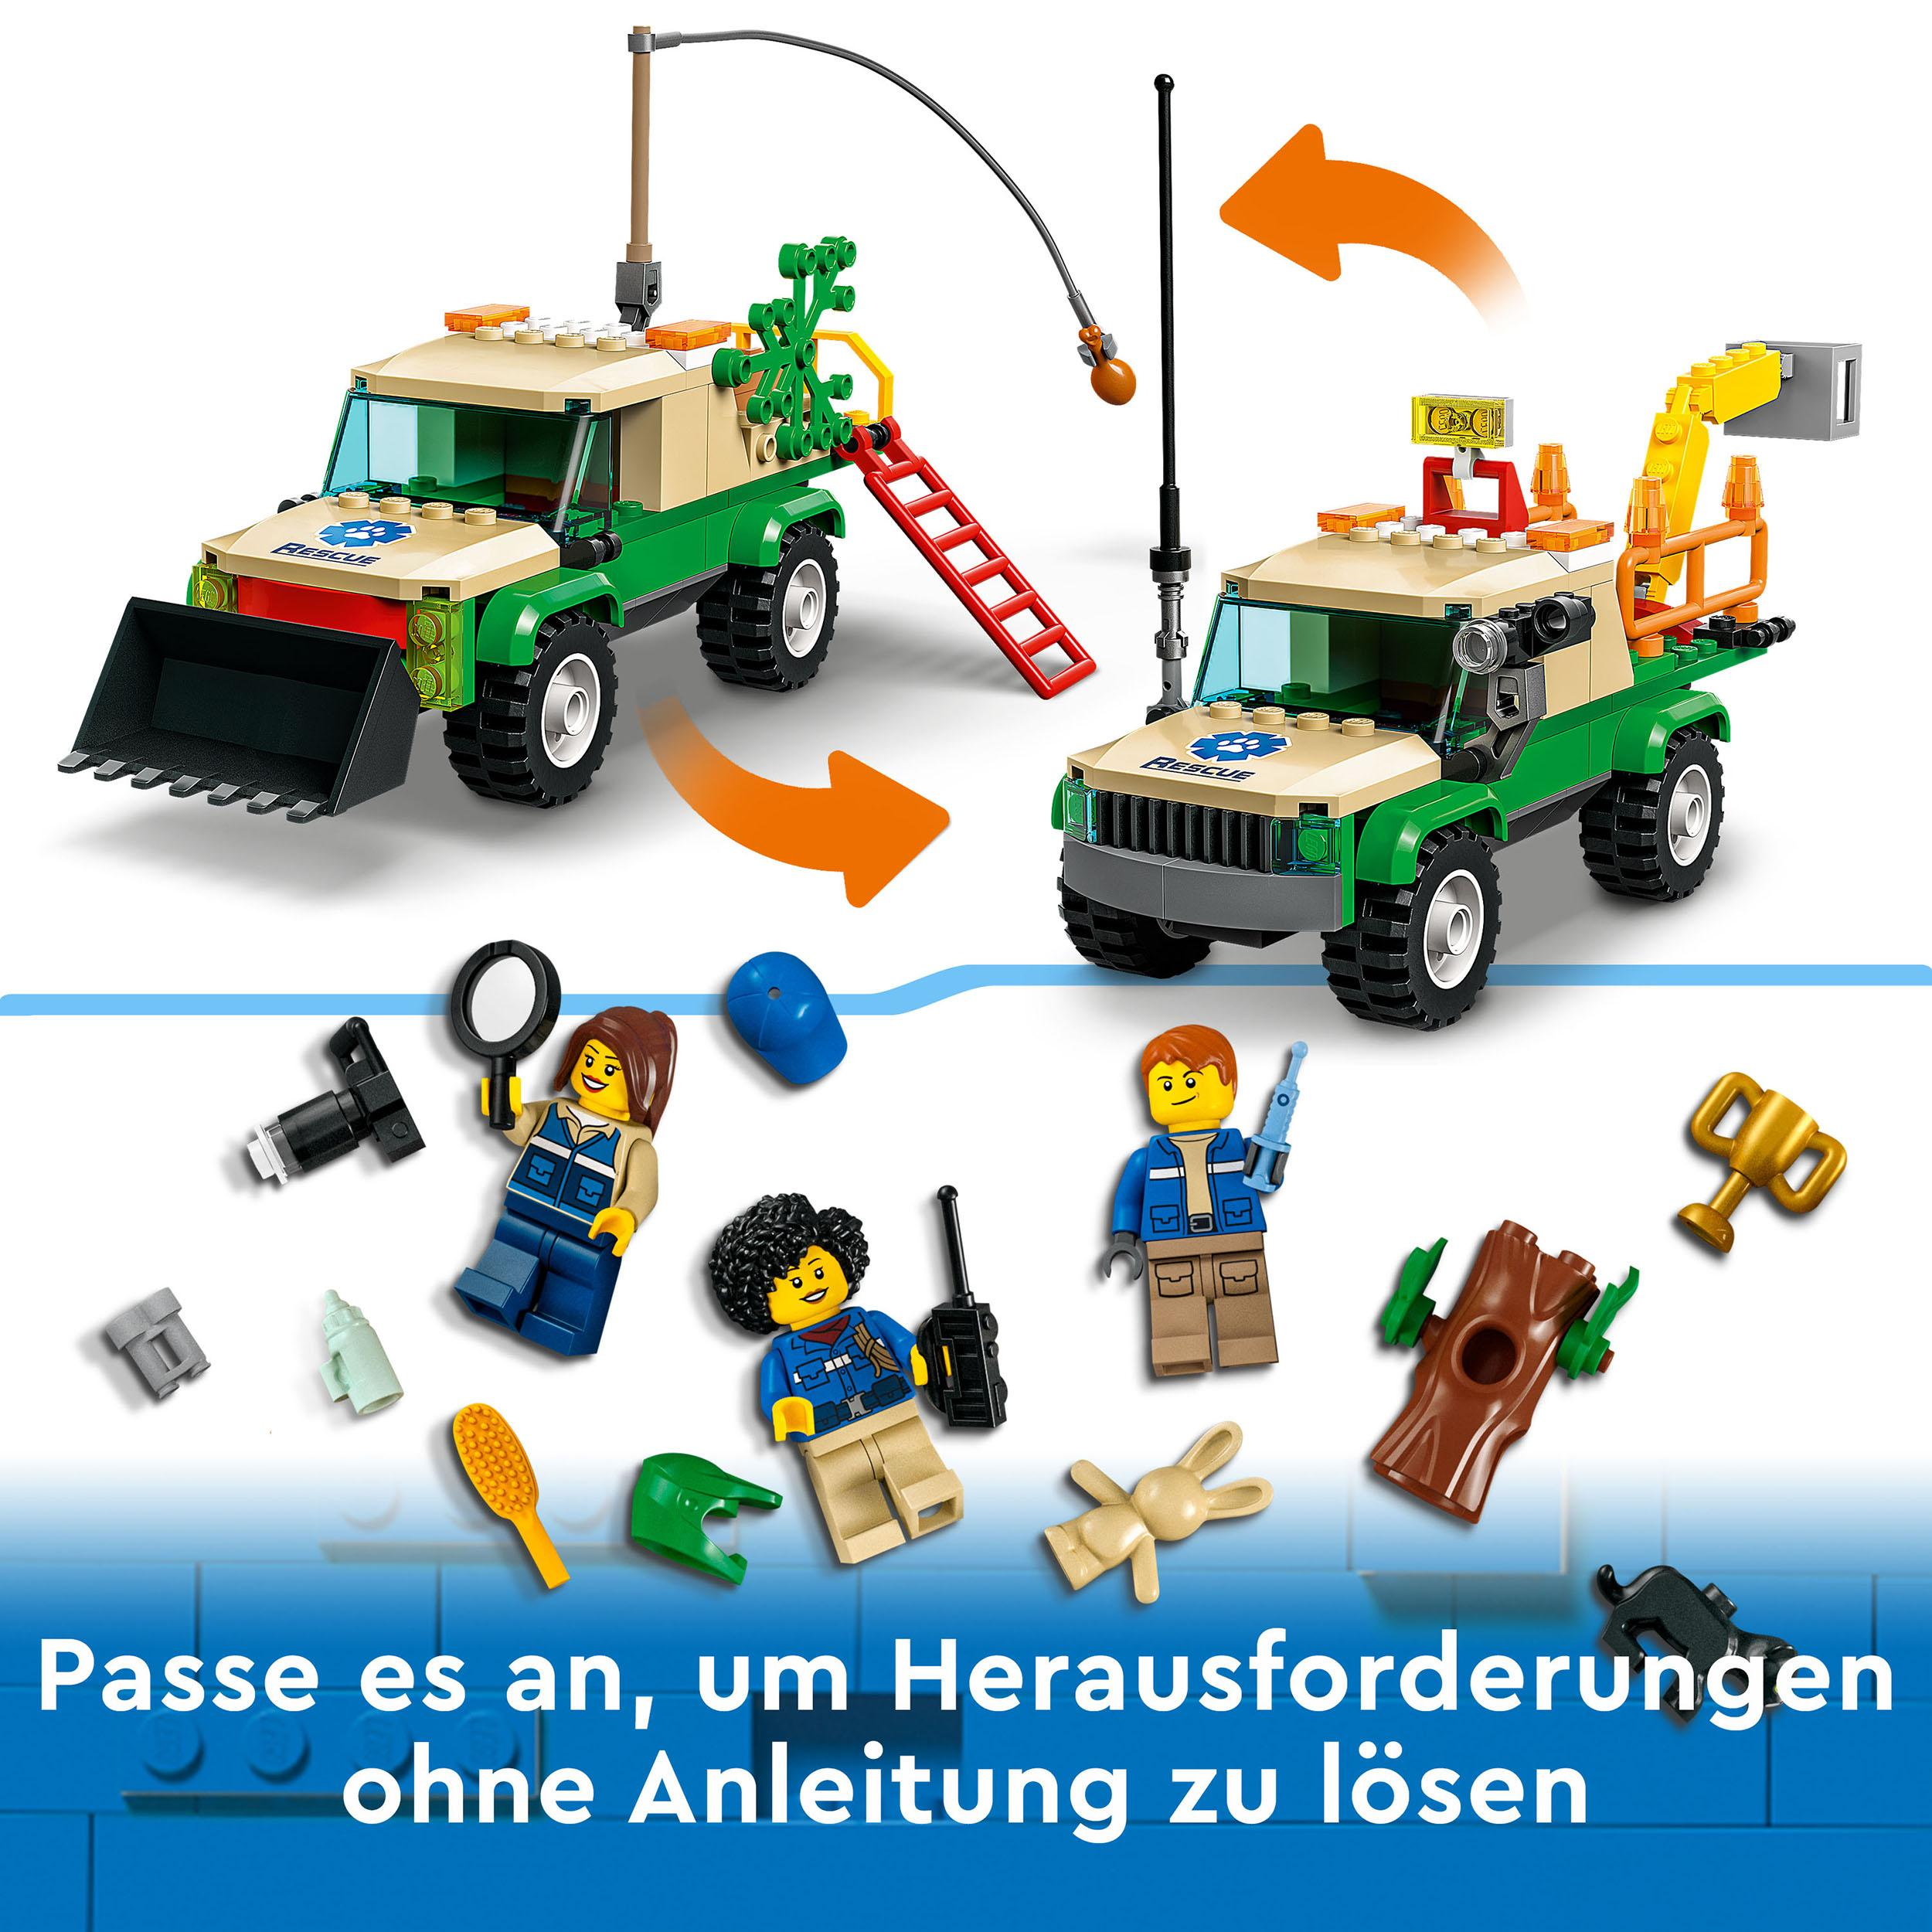 Tierrettungsmissionen LEGO City Bausatz, Mehrfarbig 60353